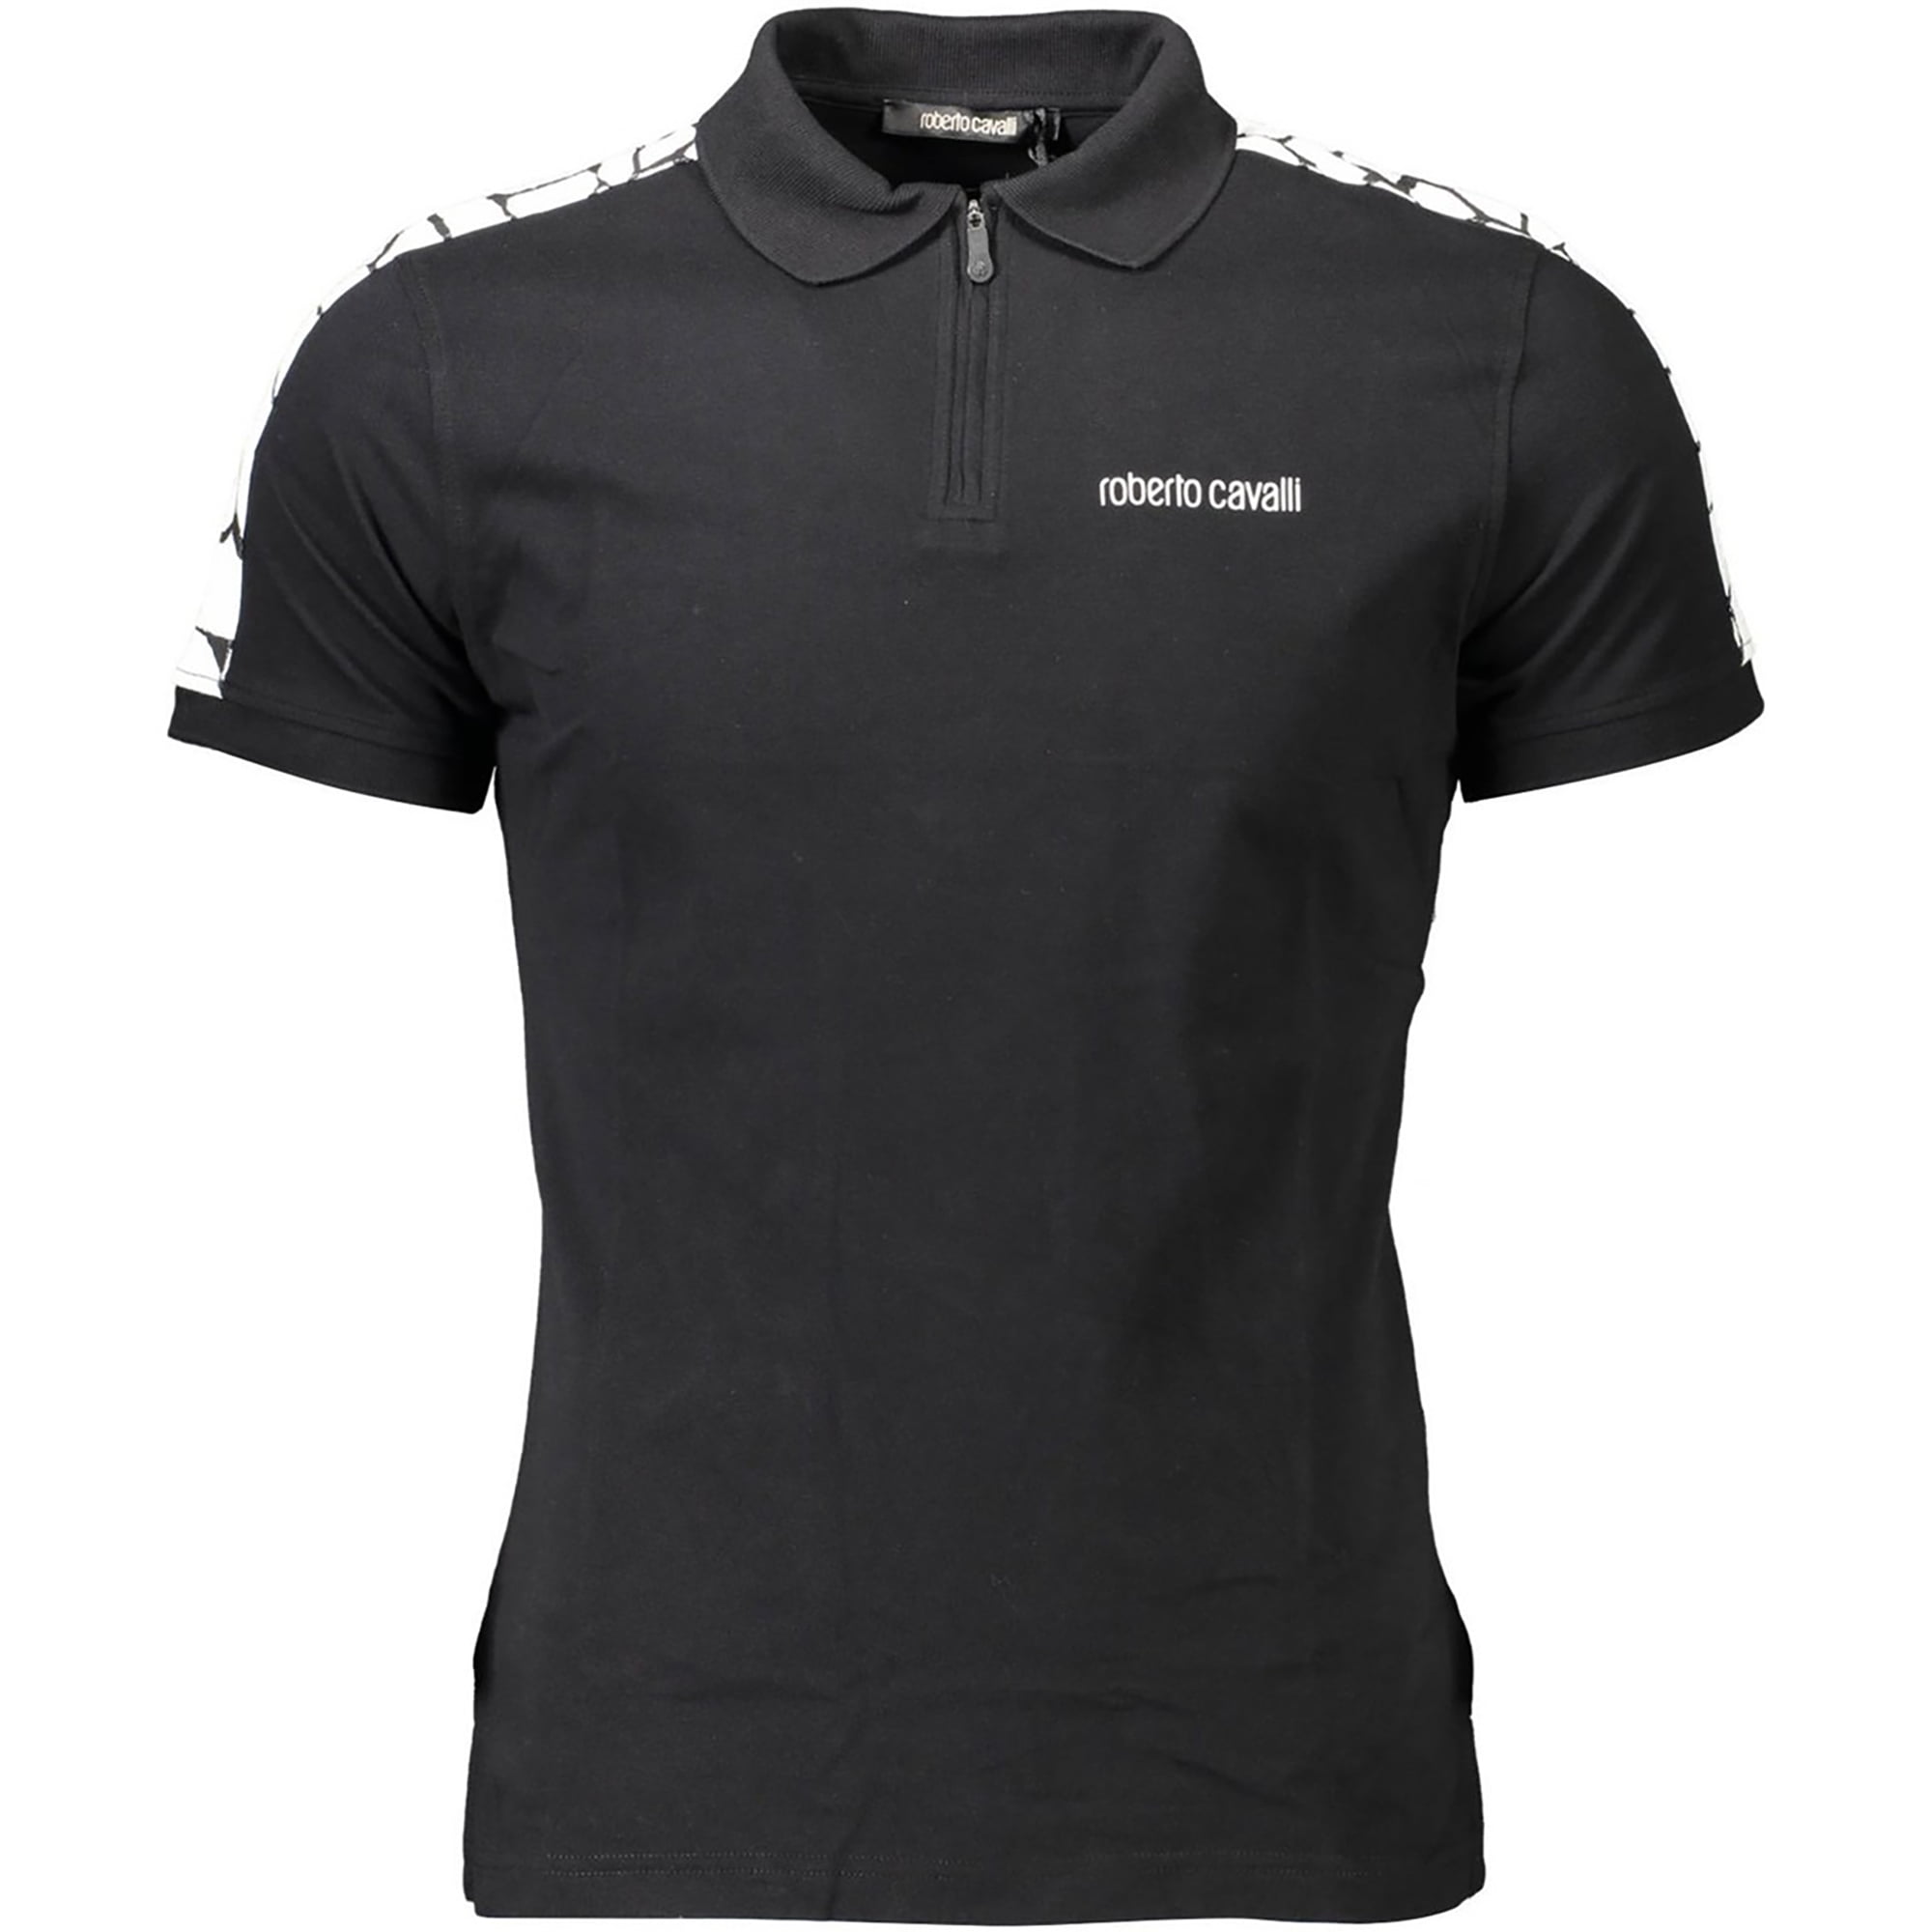 Pickering Dictado pastel Roberto Cavalli Men's Black Half Zip Polo T-Shirt (L) - Walmart.com